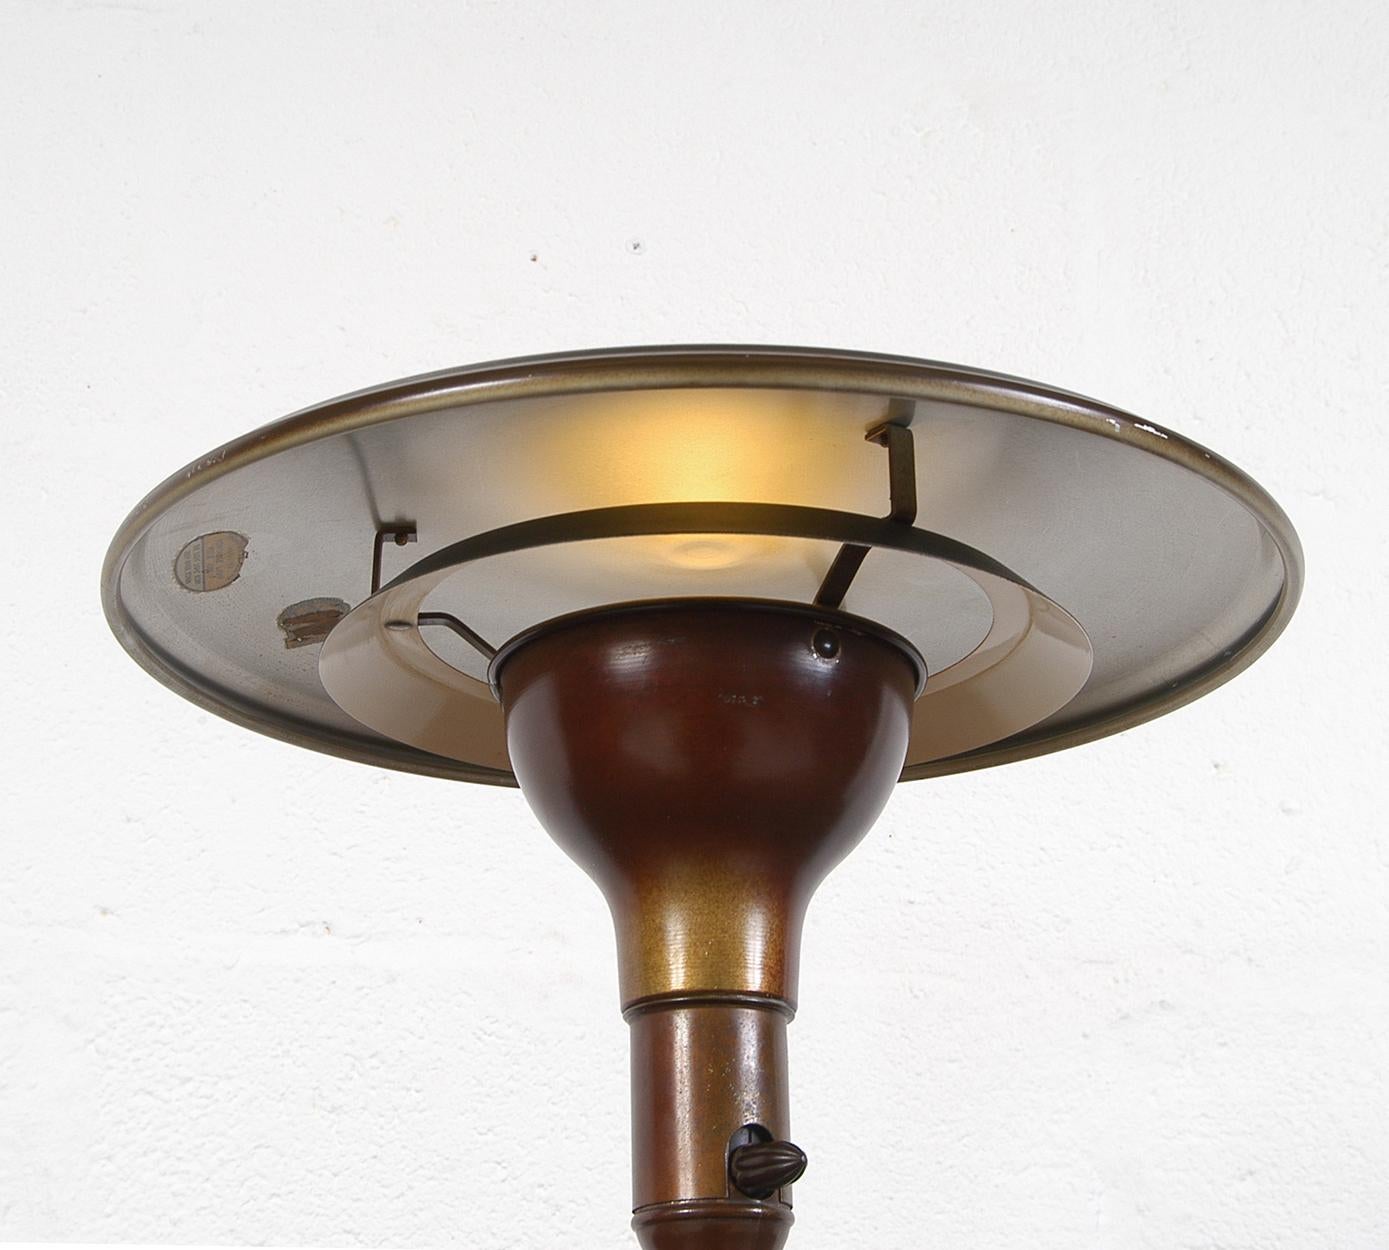 Aluminum Machine Age Art Deco 1930s American Modern Sight Light Table Lamp Leroy C Doane 